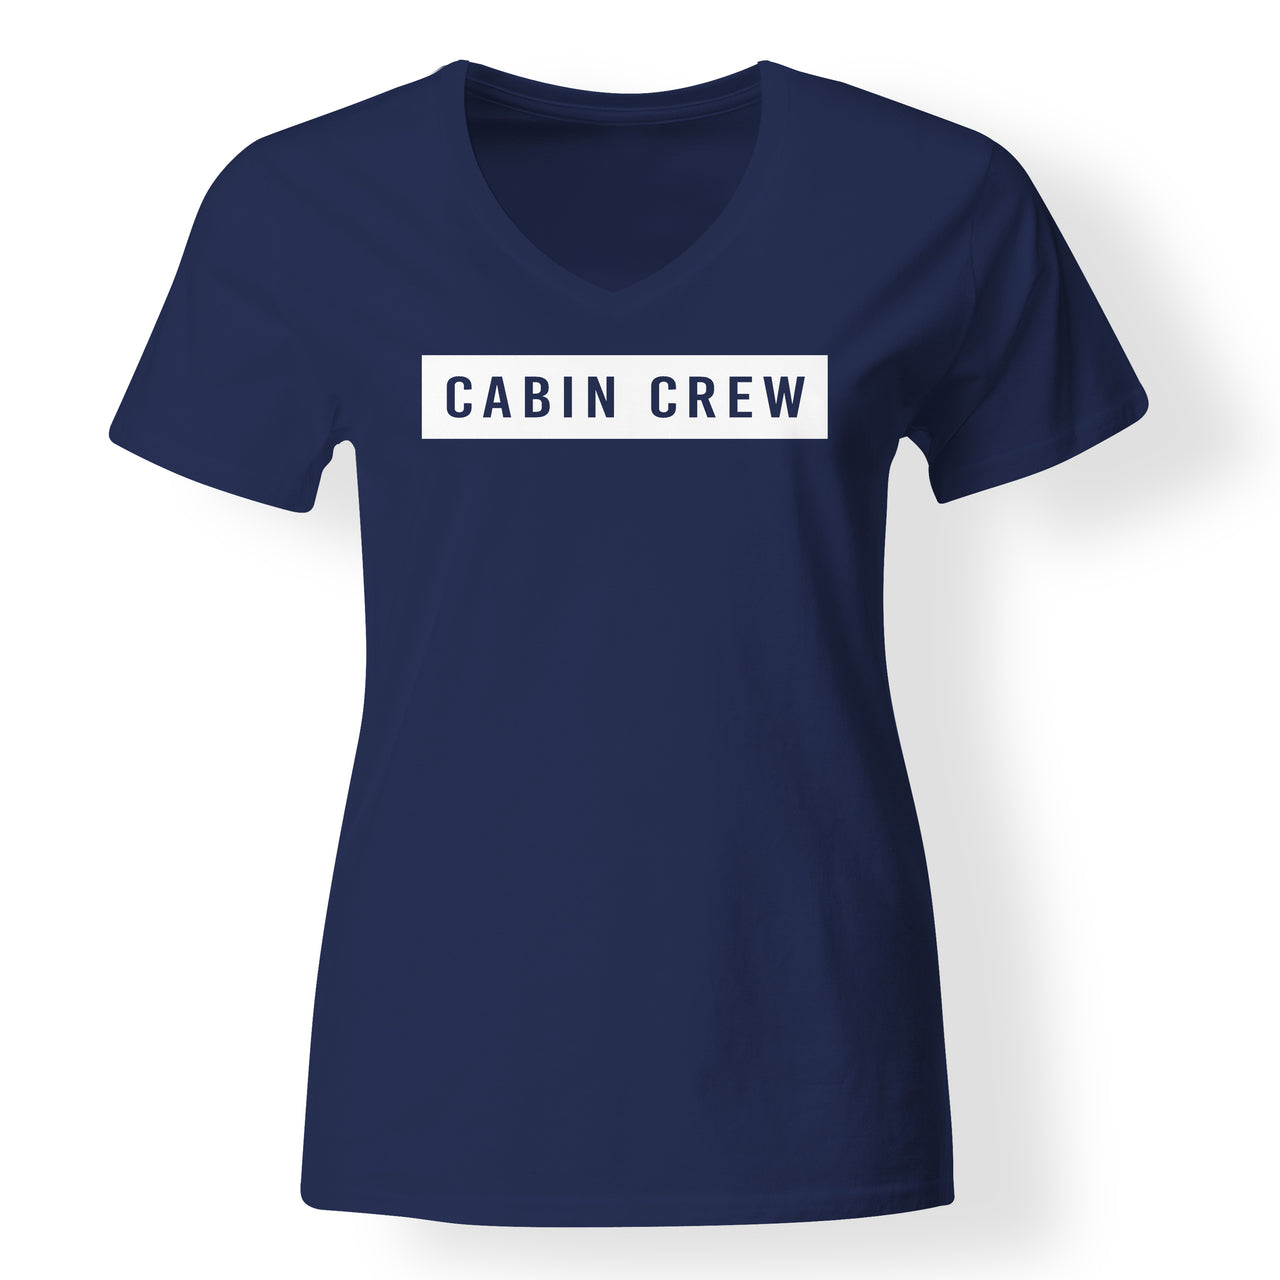 Cabin Crew Text Designed V-Neck T-Shirts